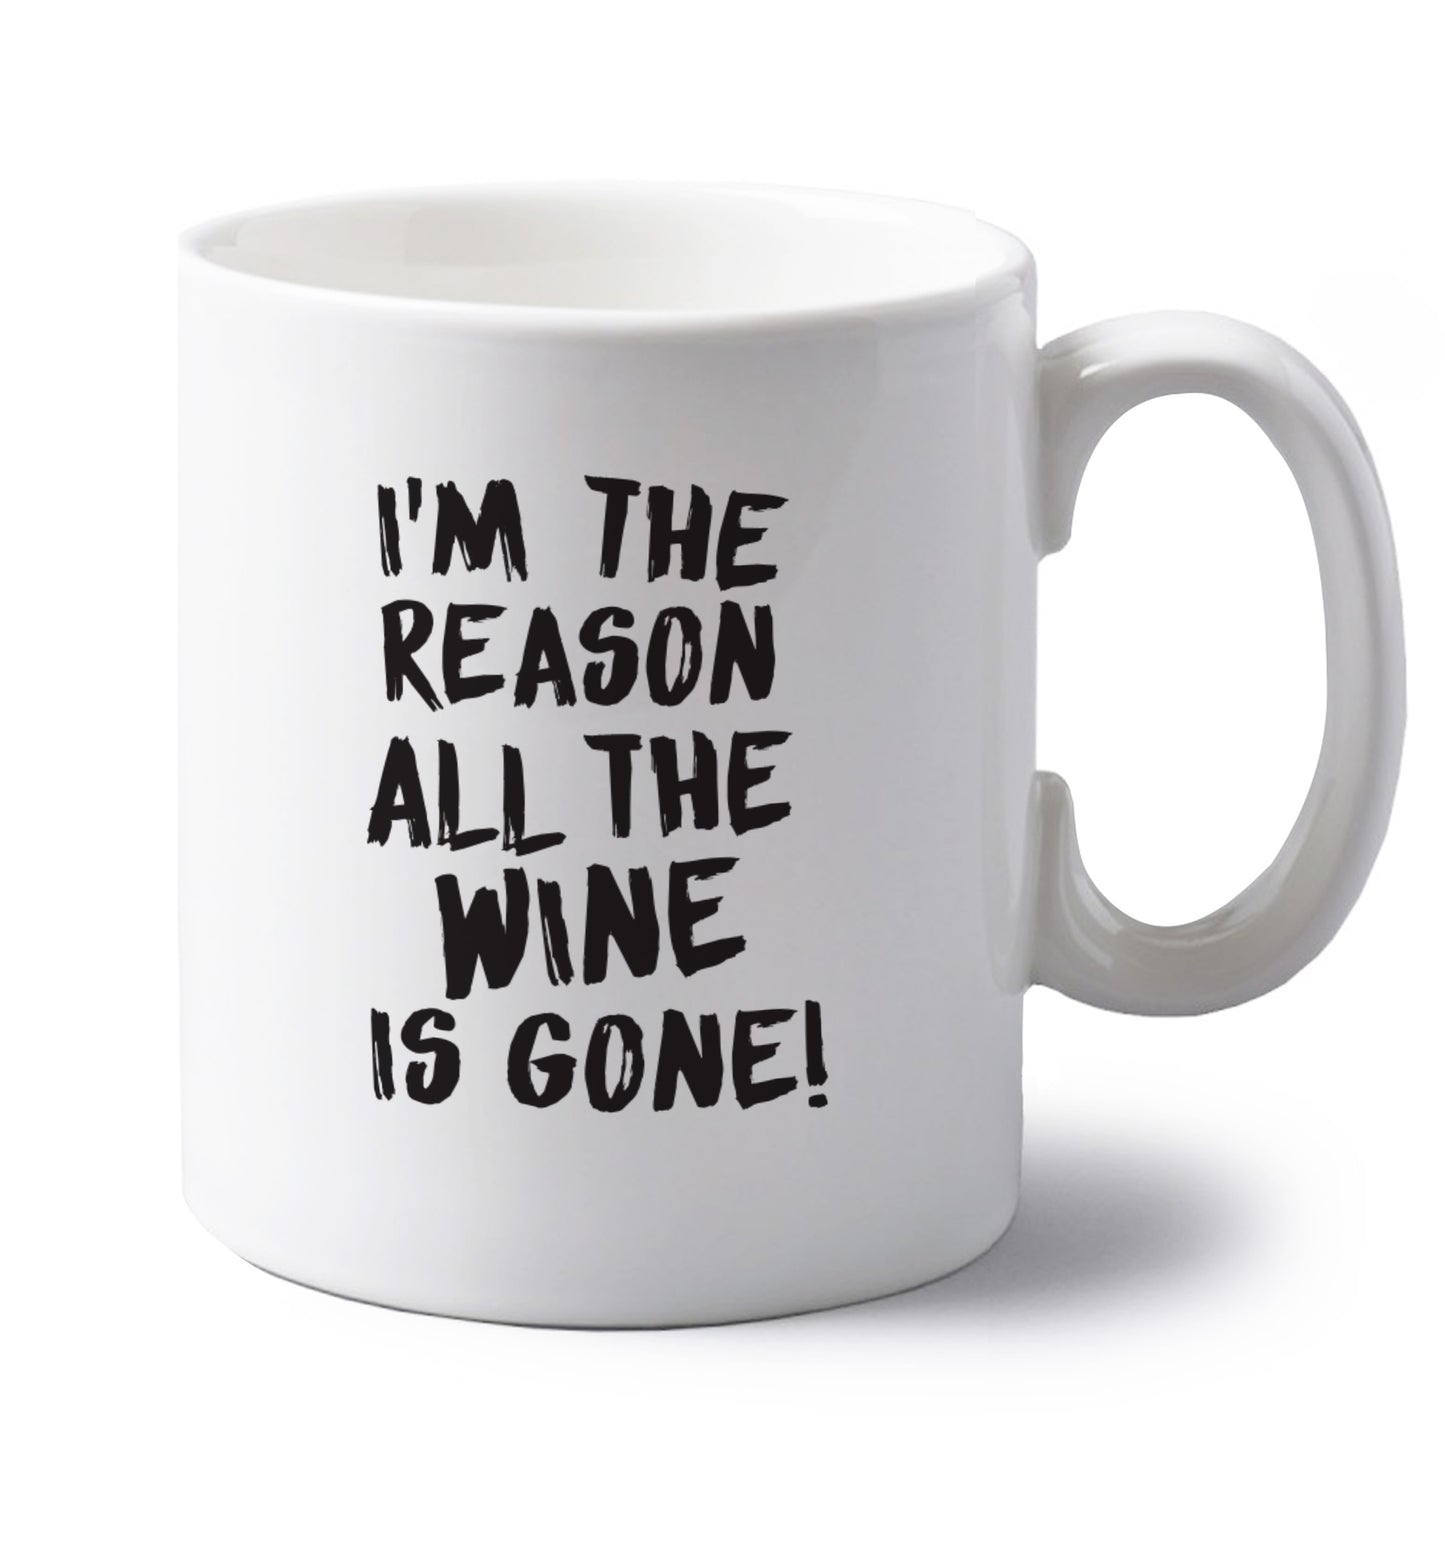 I'm the reason all the wine is gone left handed white ceramic mug 